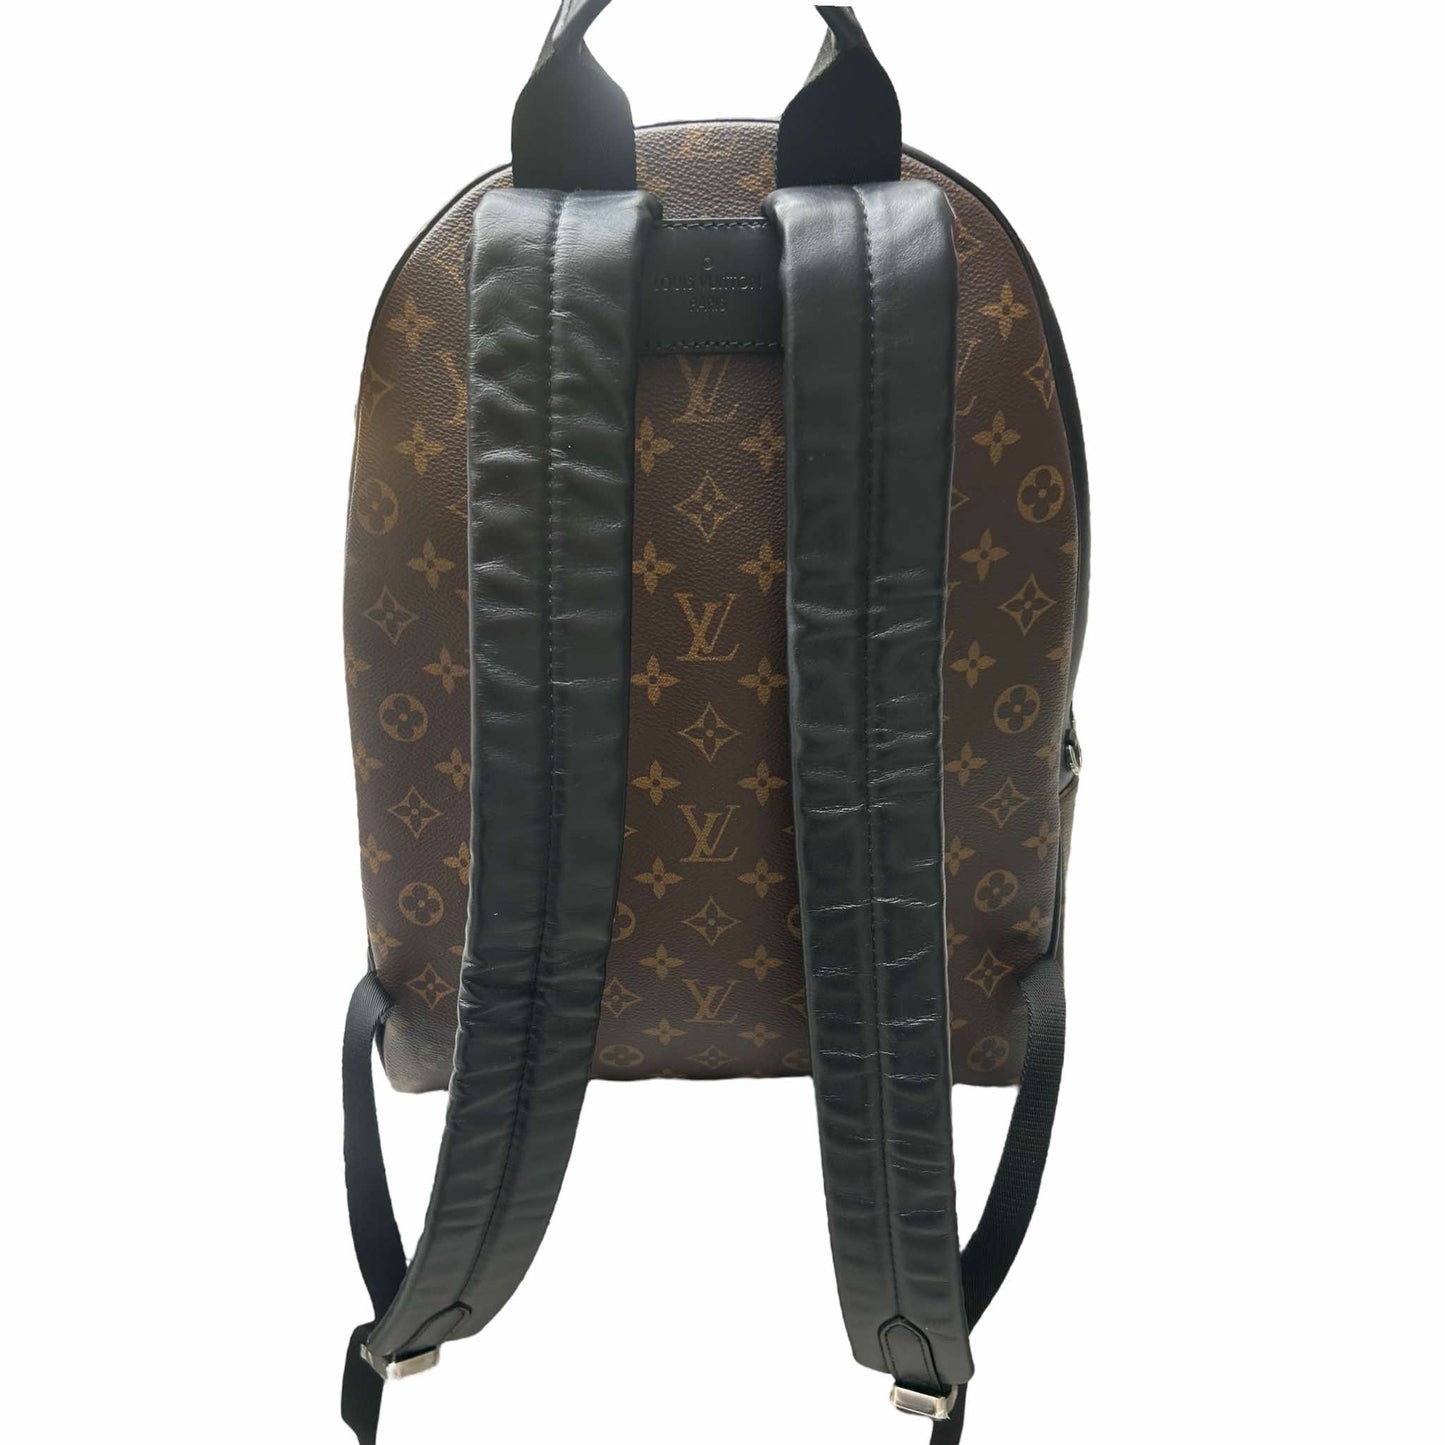 Louis Vuitton Josh Backpack - M45349